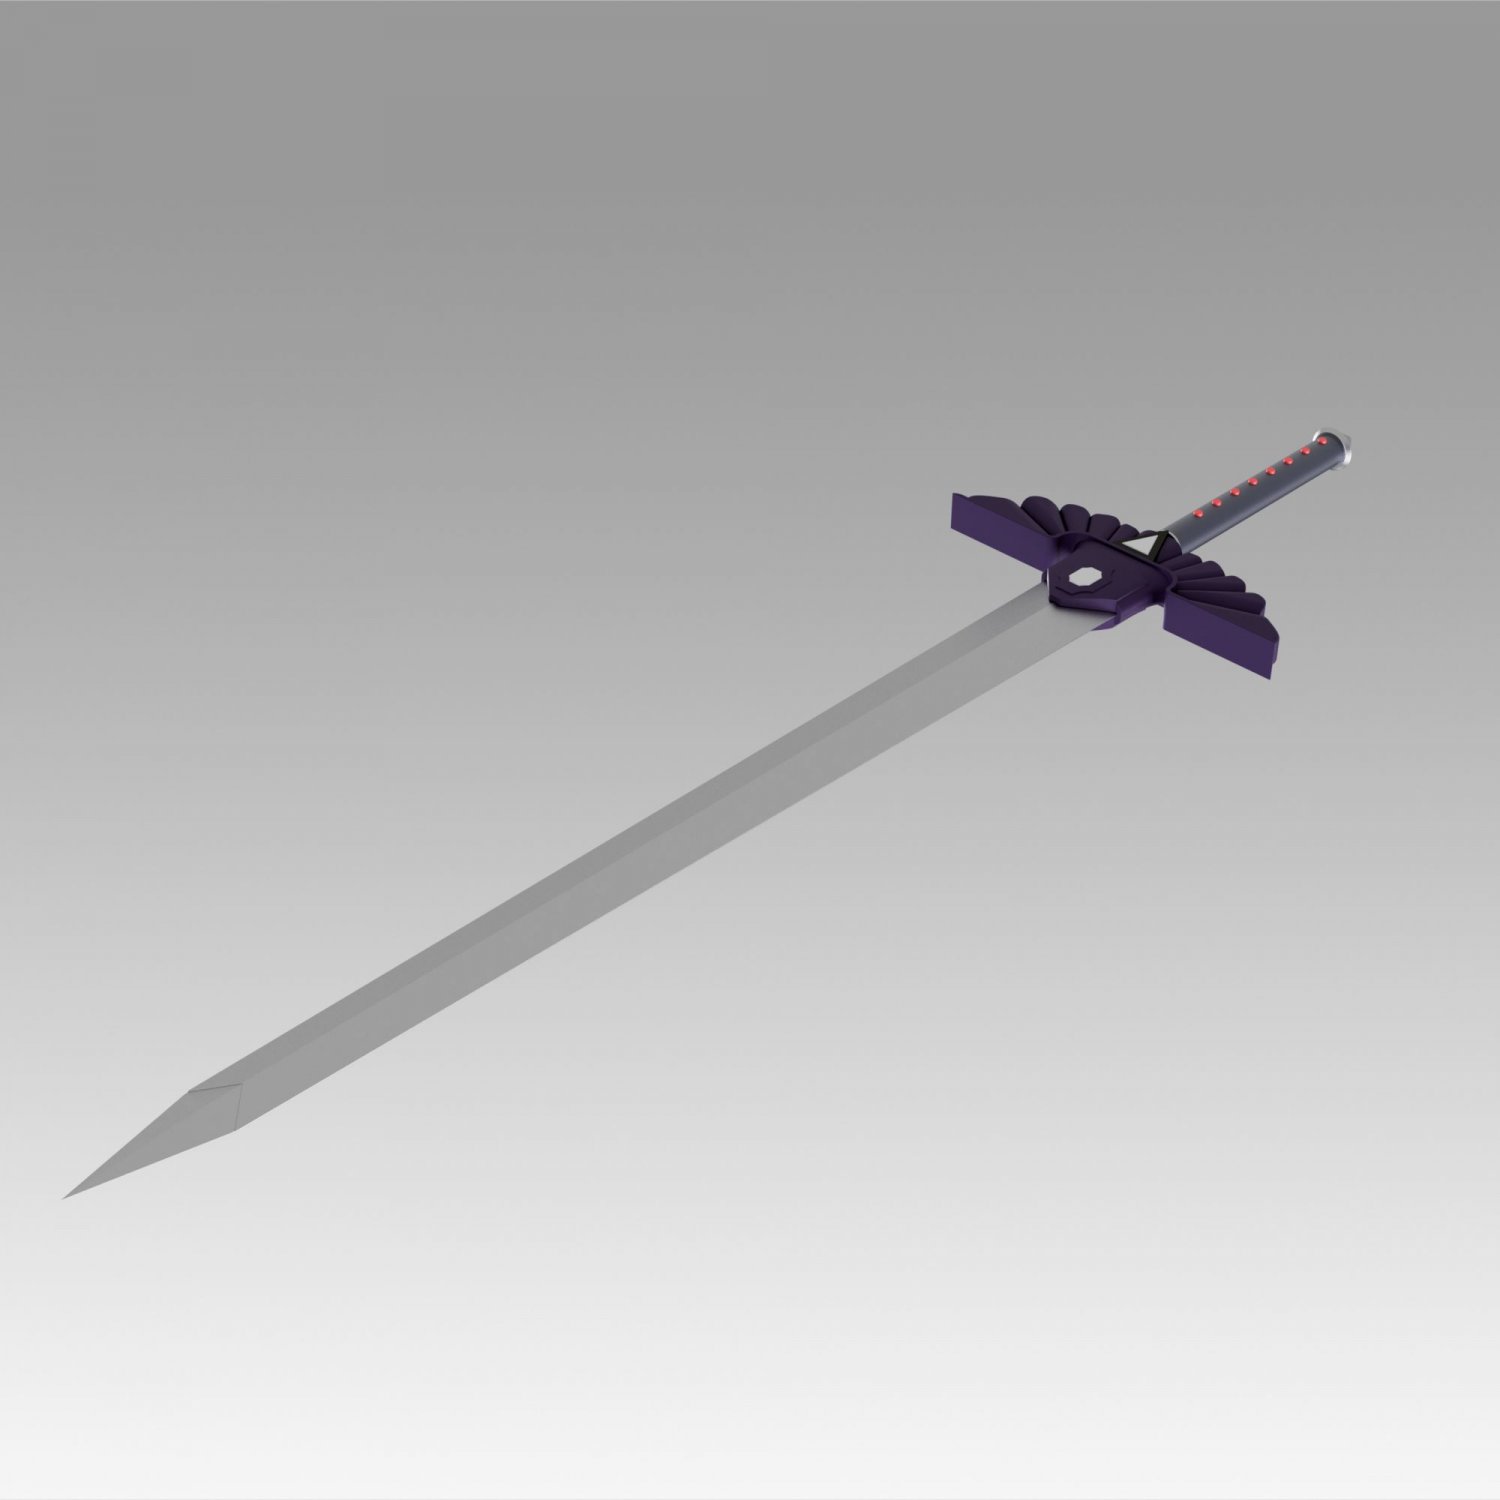 Hades 2 Main Character Dagger Cosplay Weapon Prop